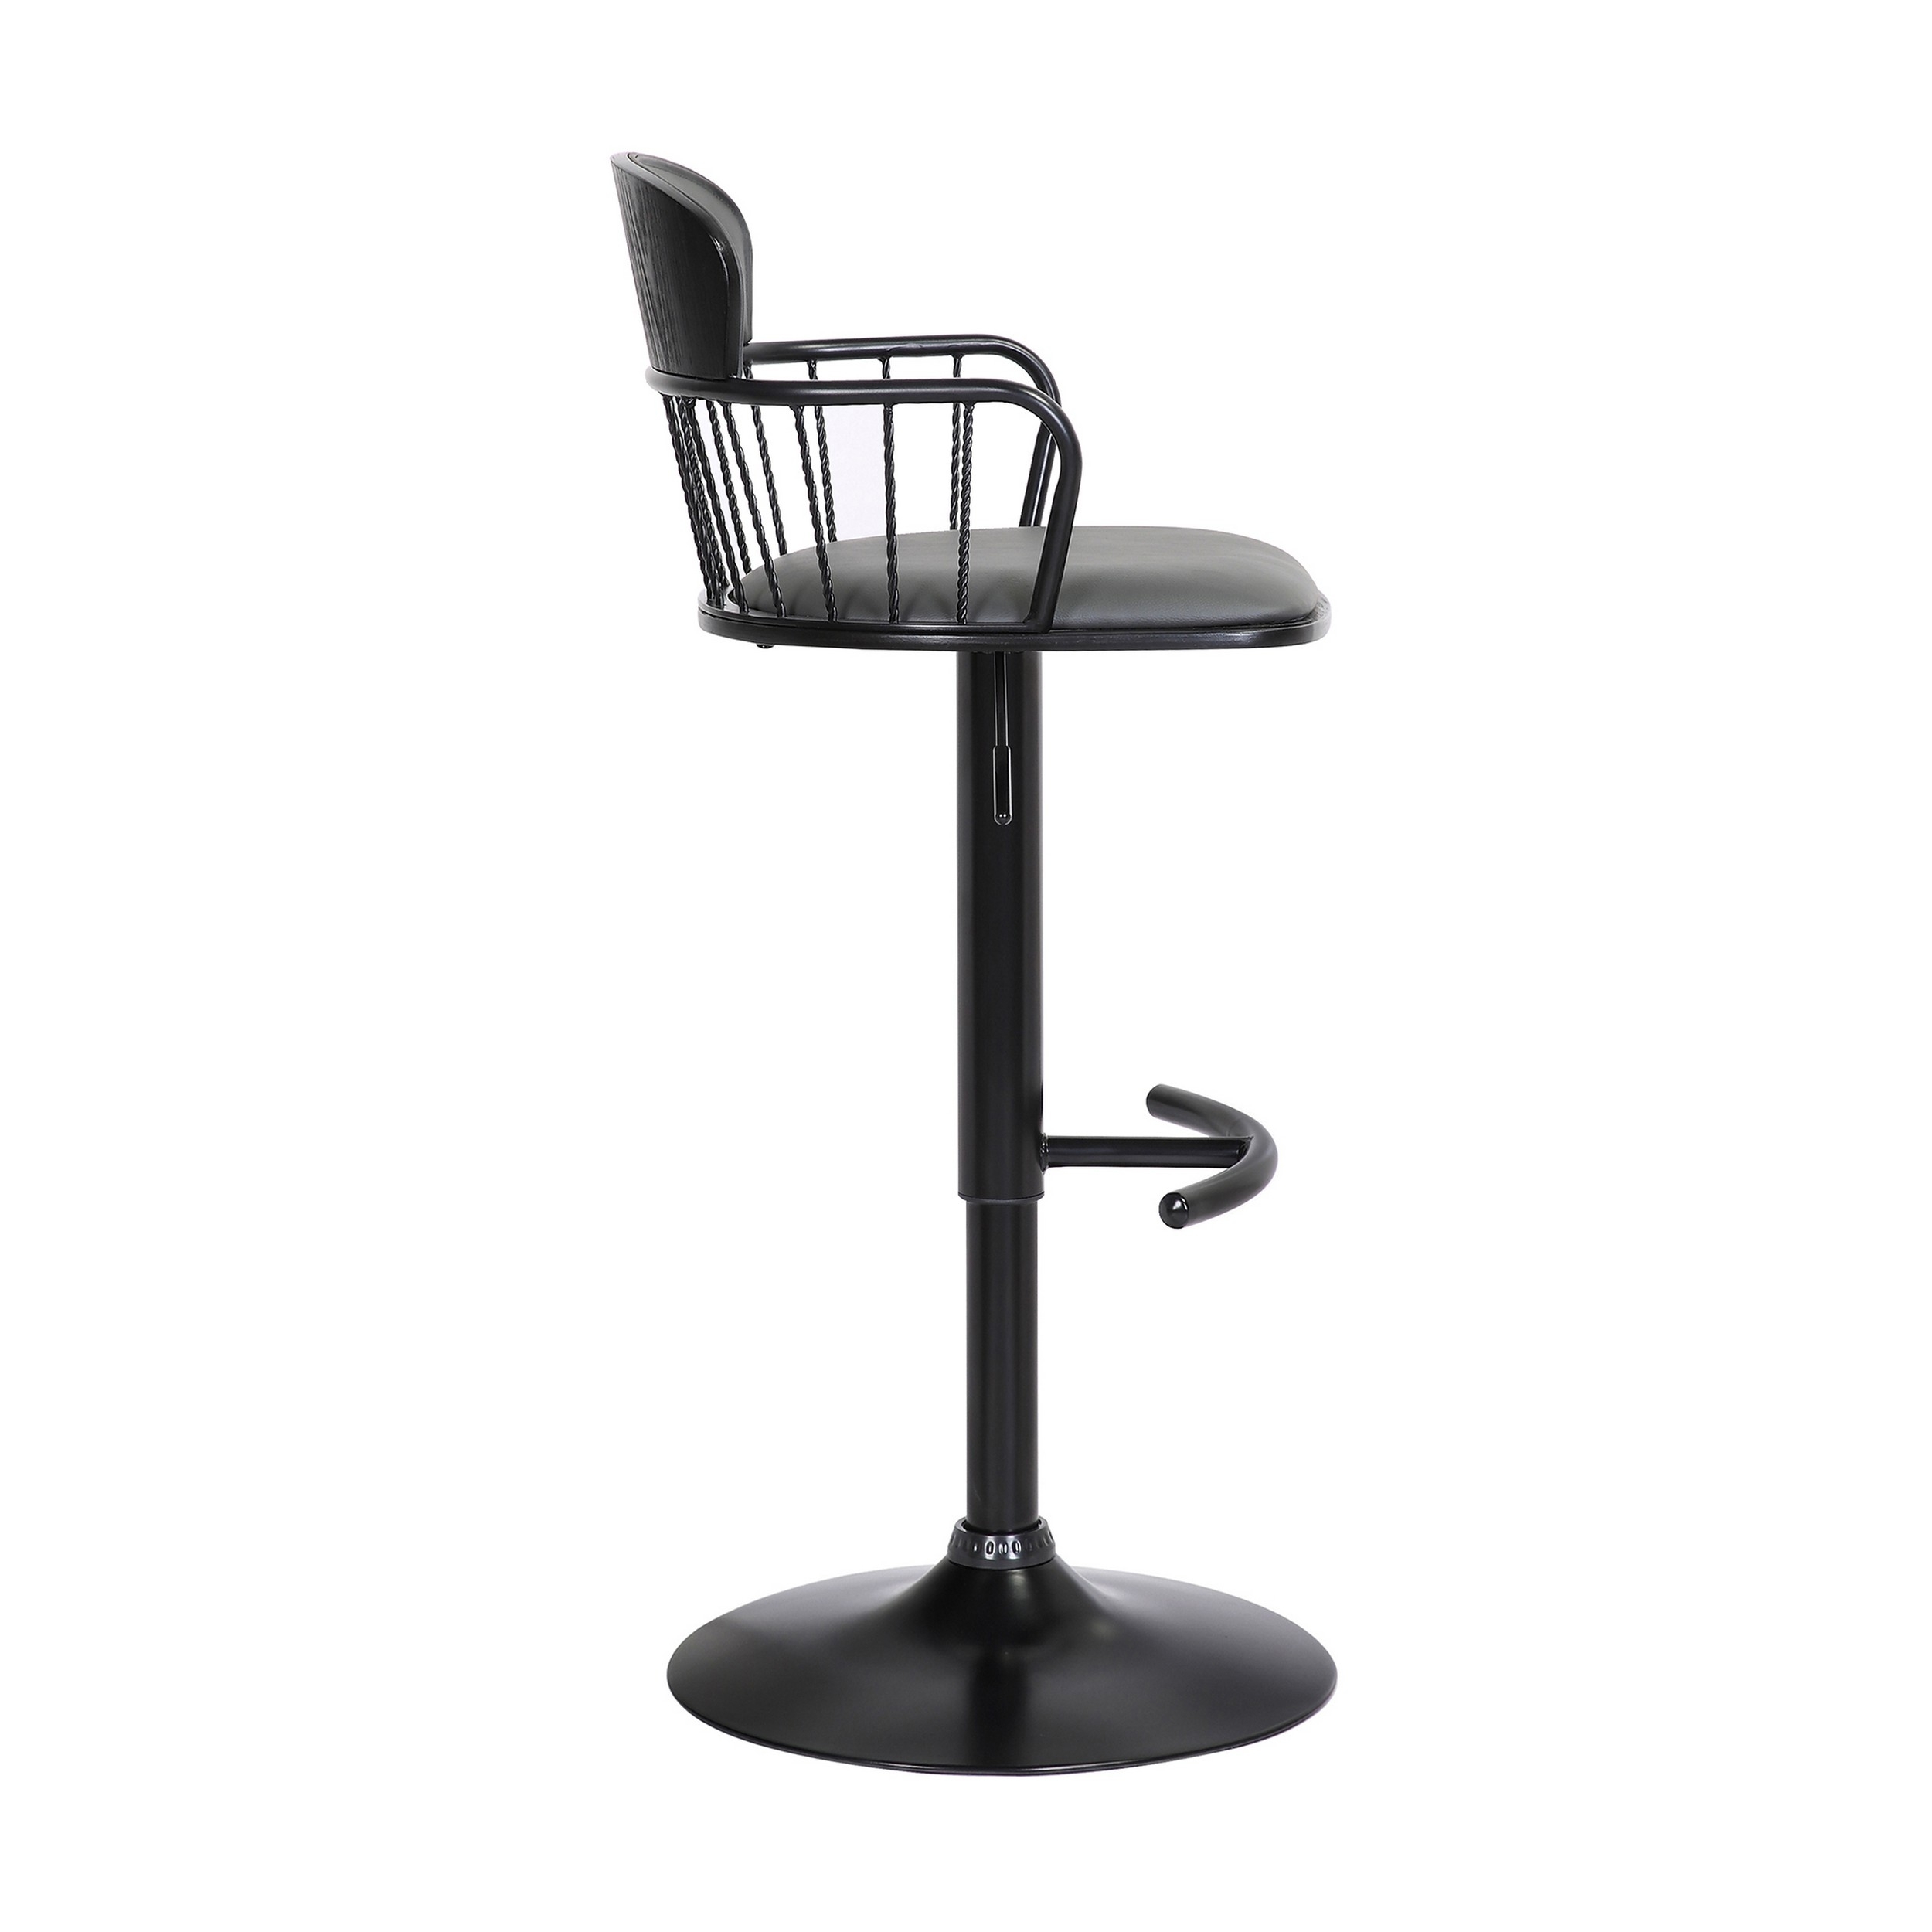 Nish 25-33 Inch Adjustable Barstool Chair, Gray Faux Leather, Black Frame - Saltoro Sherpi